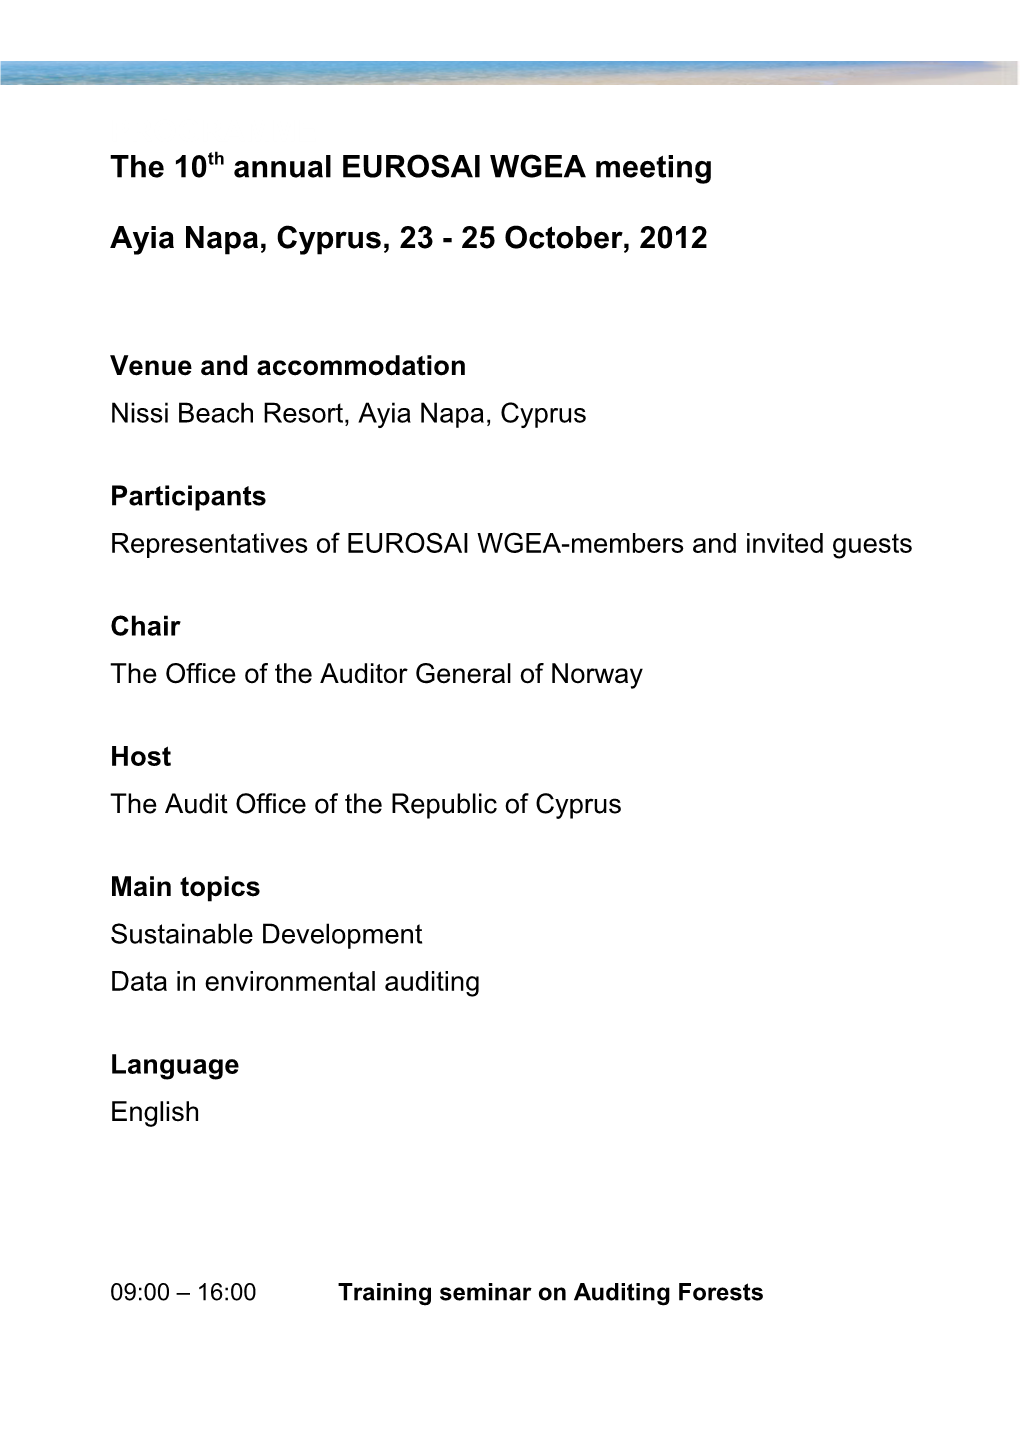 The 10Th Annual EUROSAI WGEA Meeting Cyprus